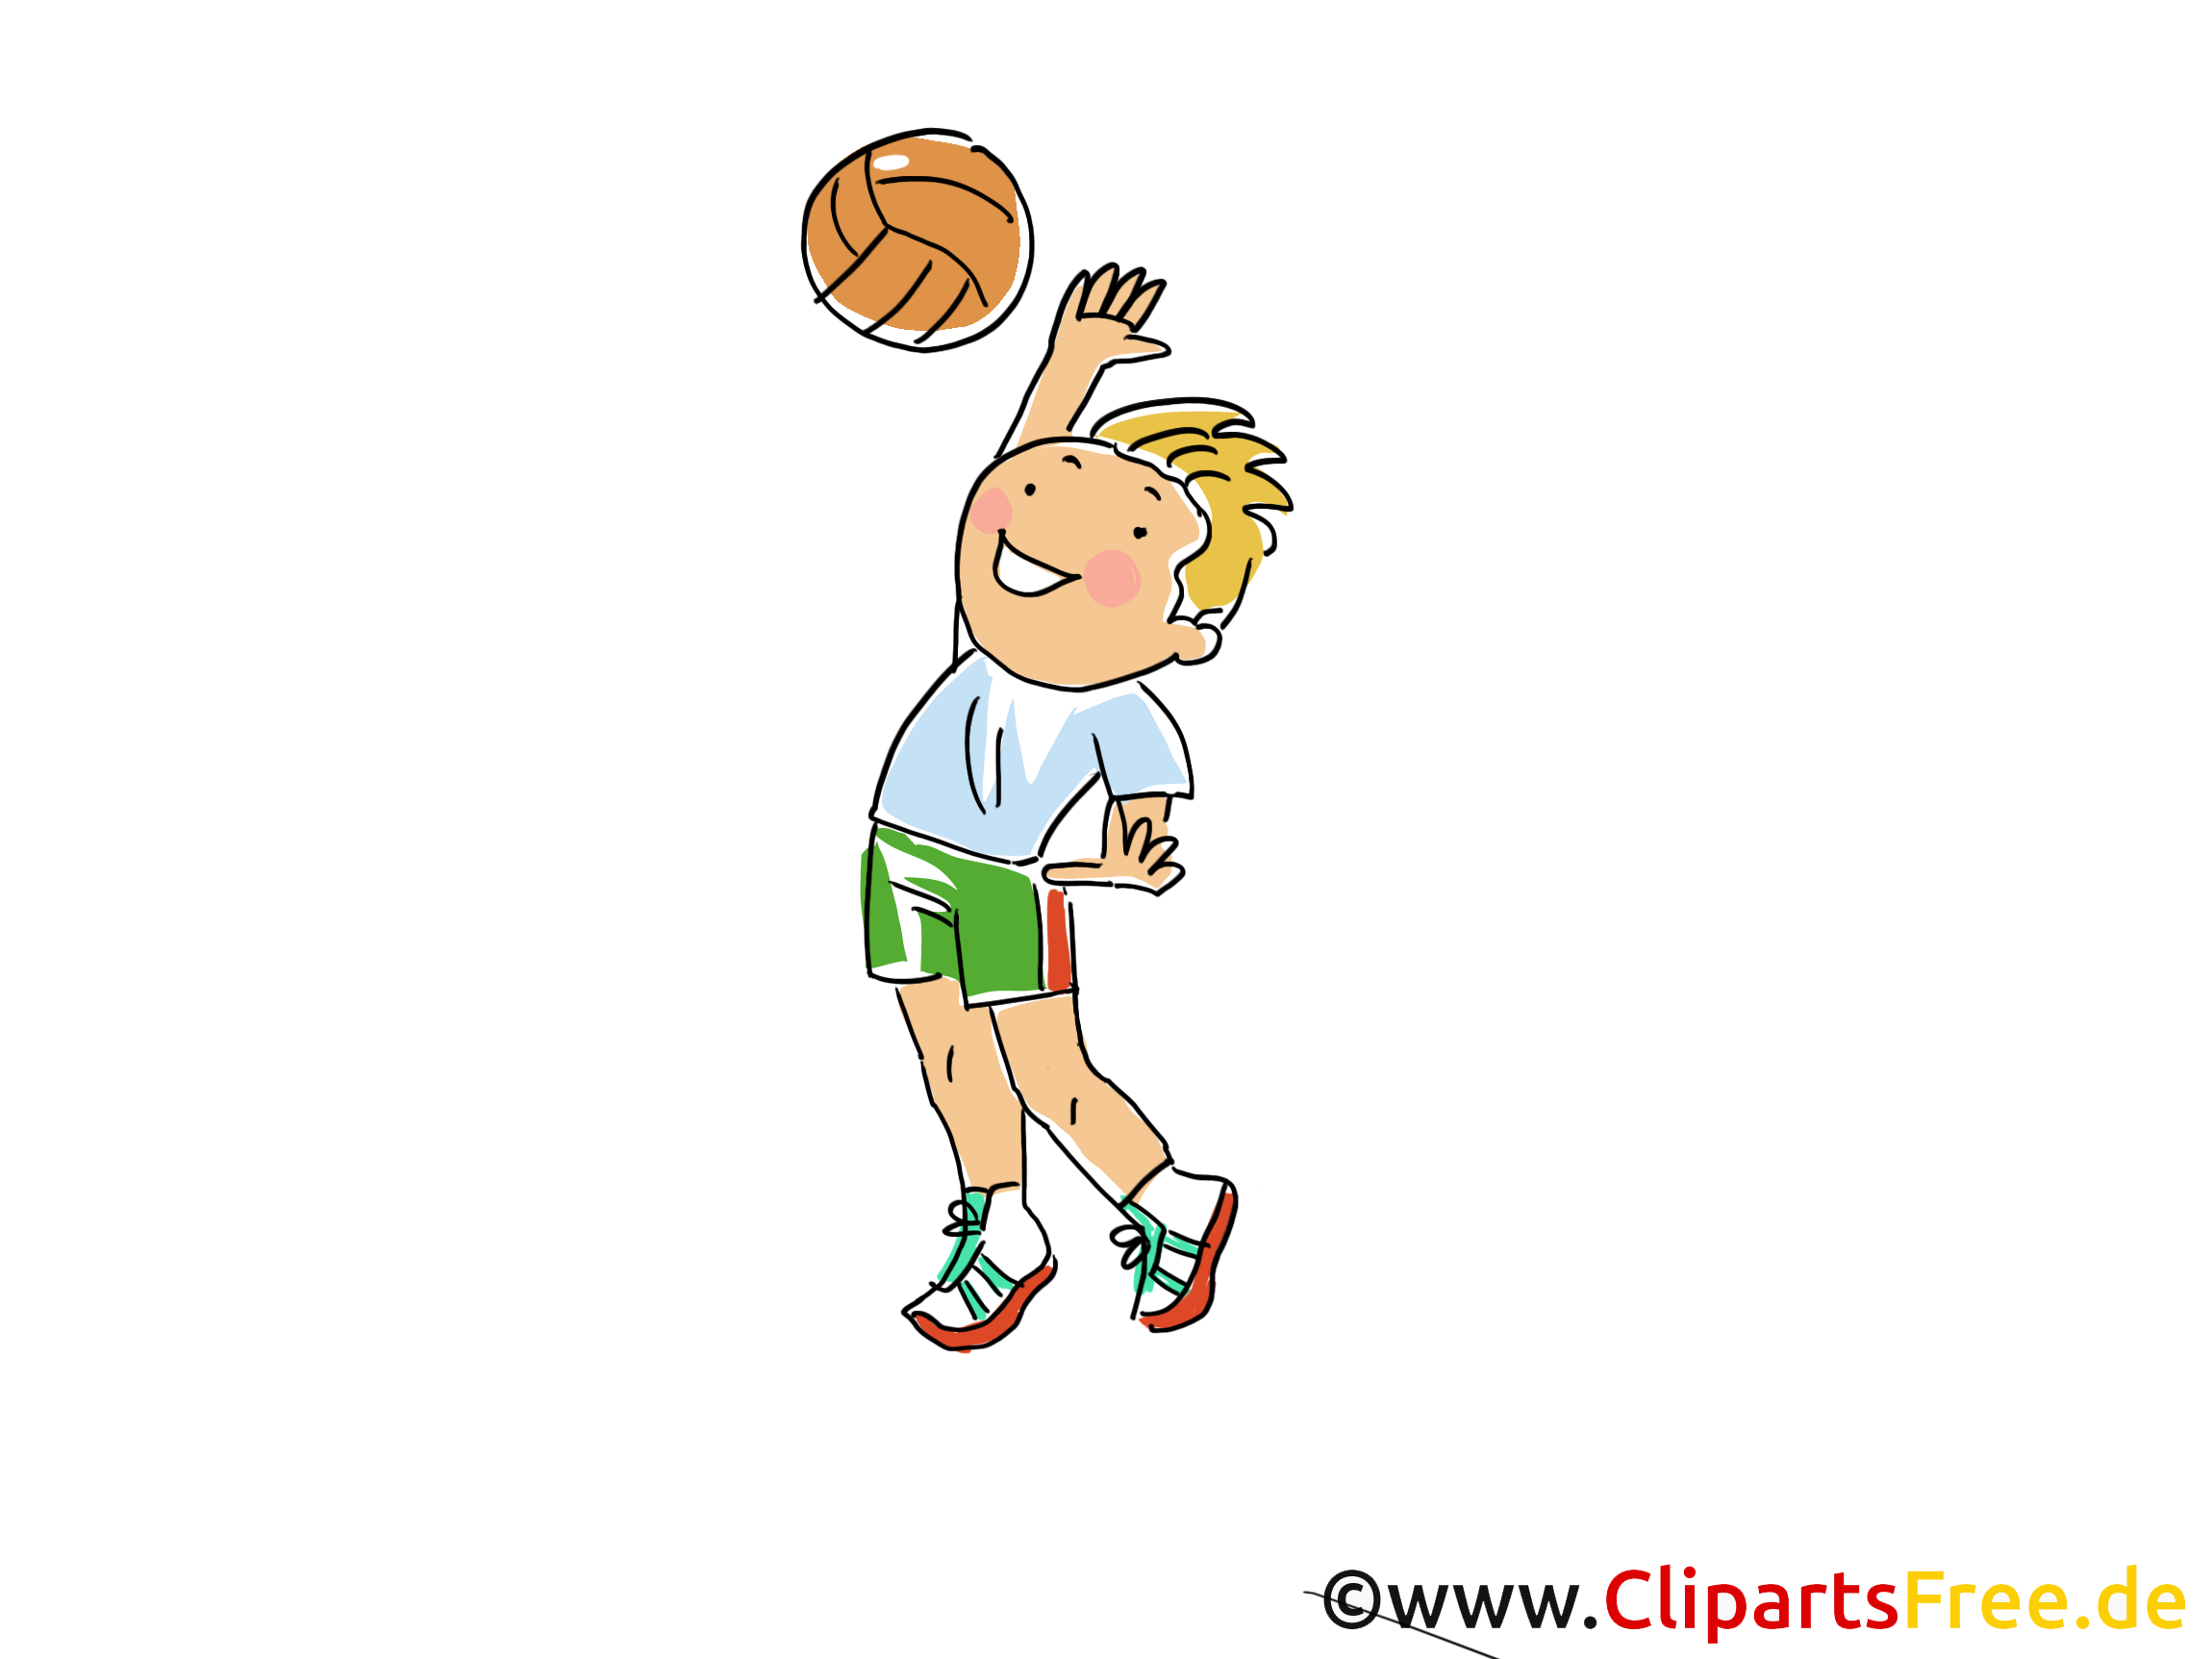 clipart gratuit handball - photo #2